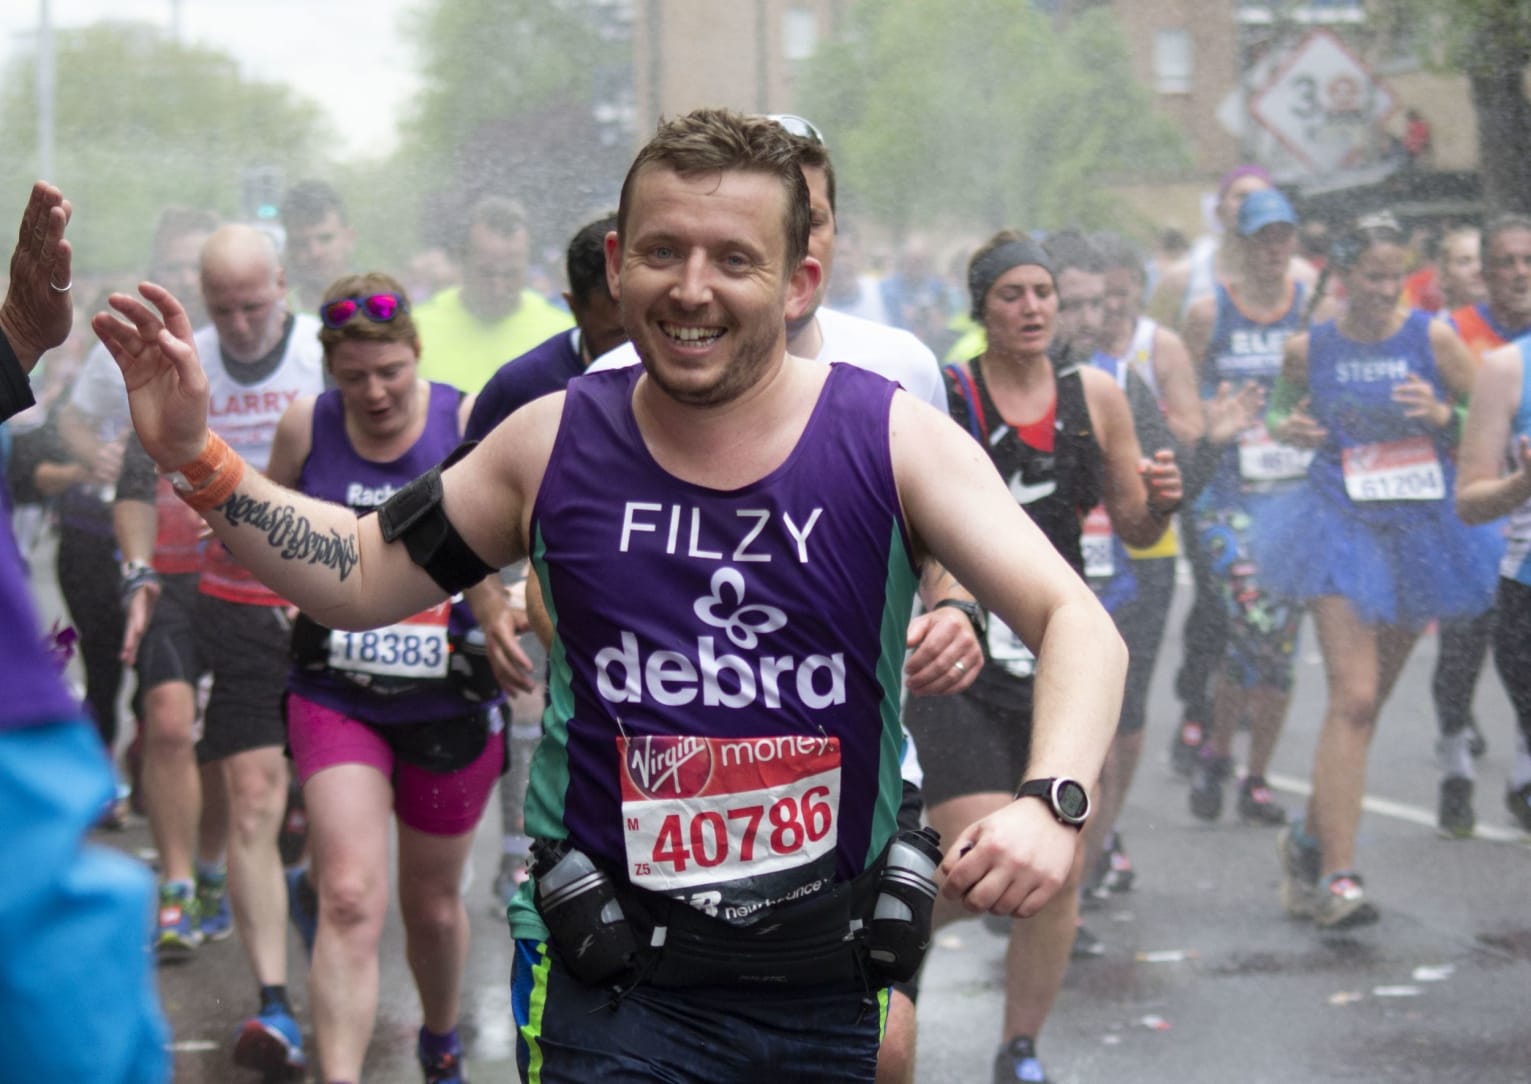 DEBRA supporter running the London Marathon